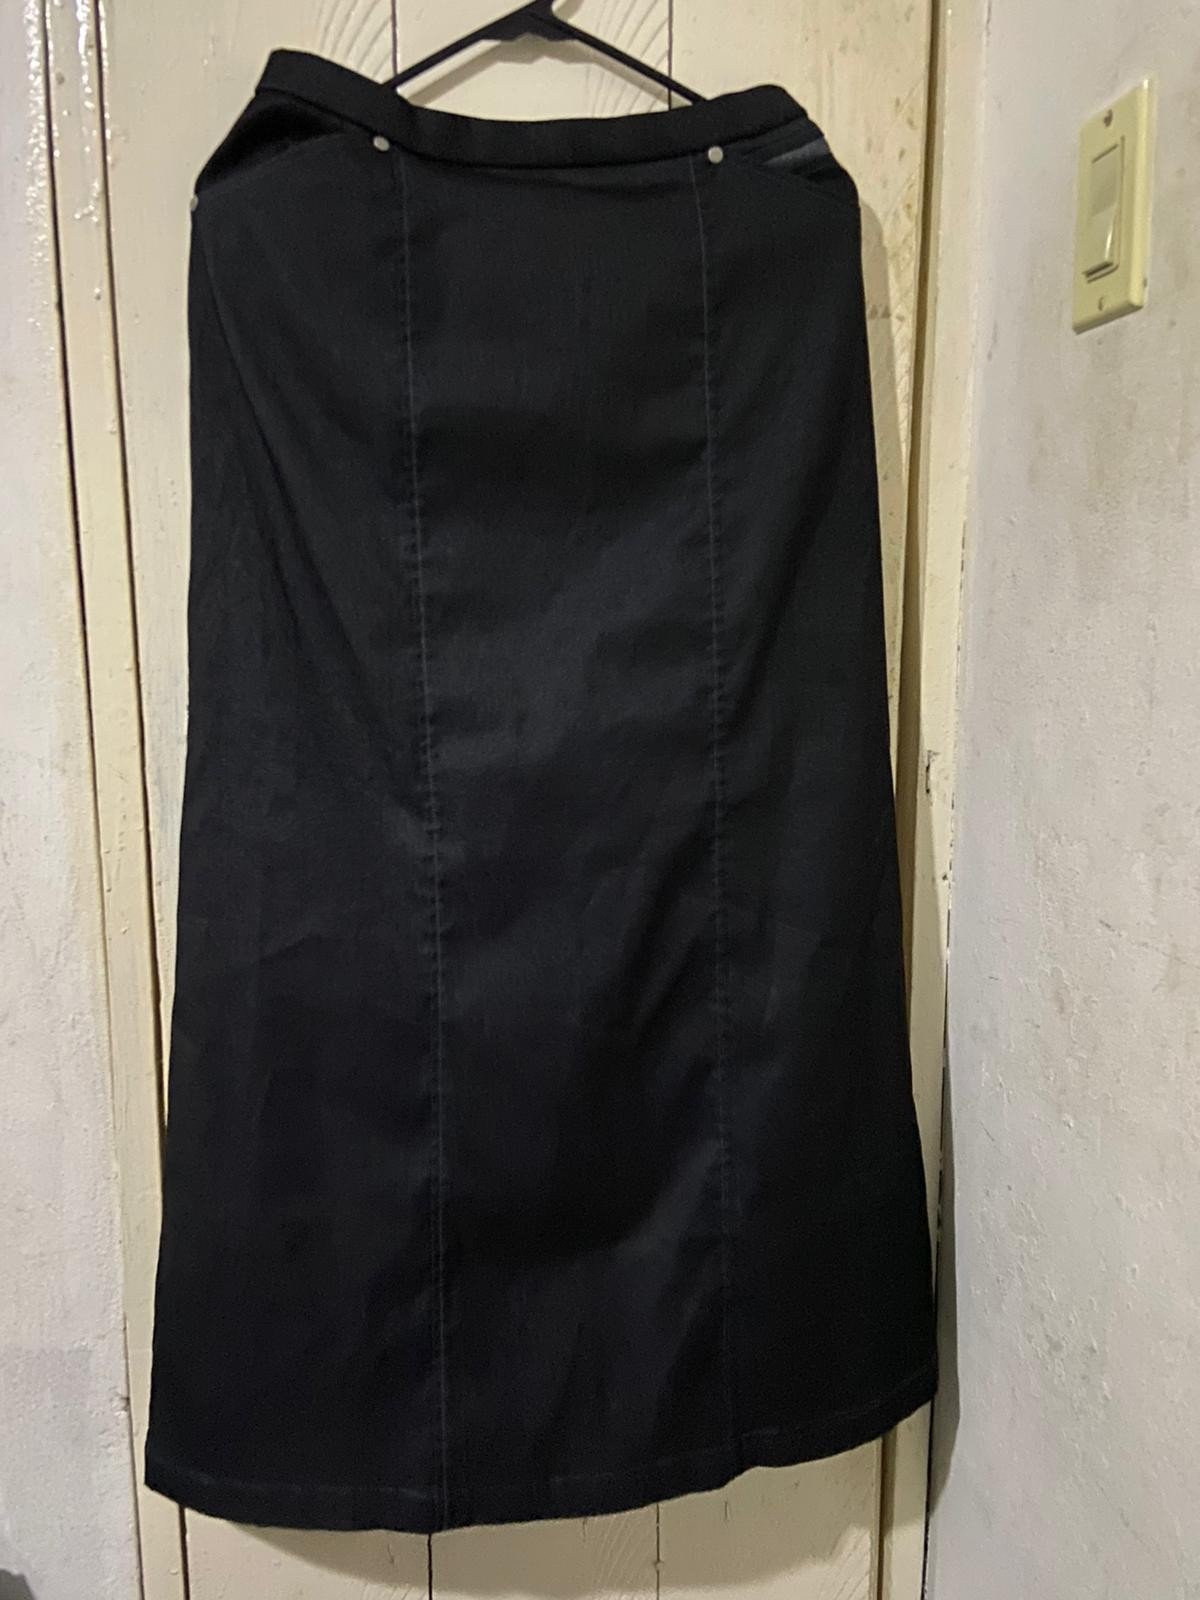 For Sale: Black Long Jean Skirt, Size Medium - Old Harbour